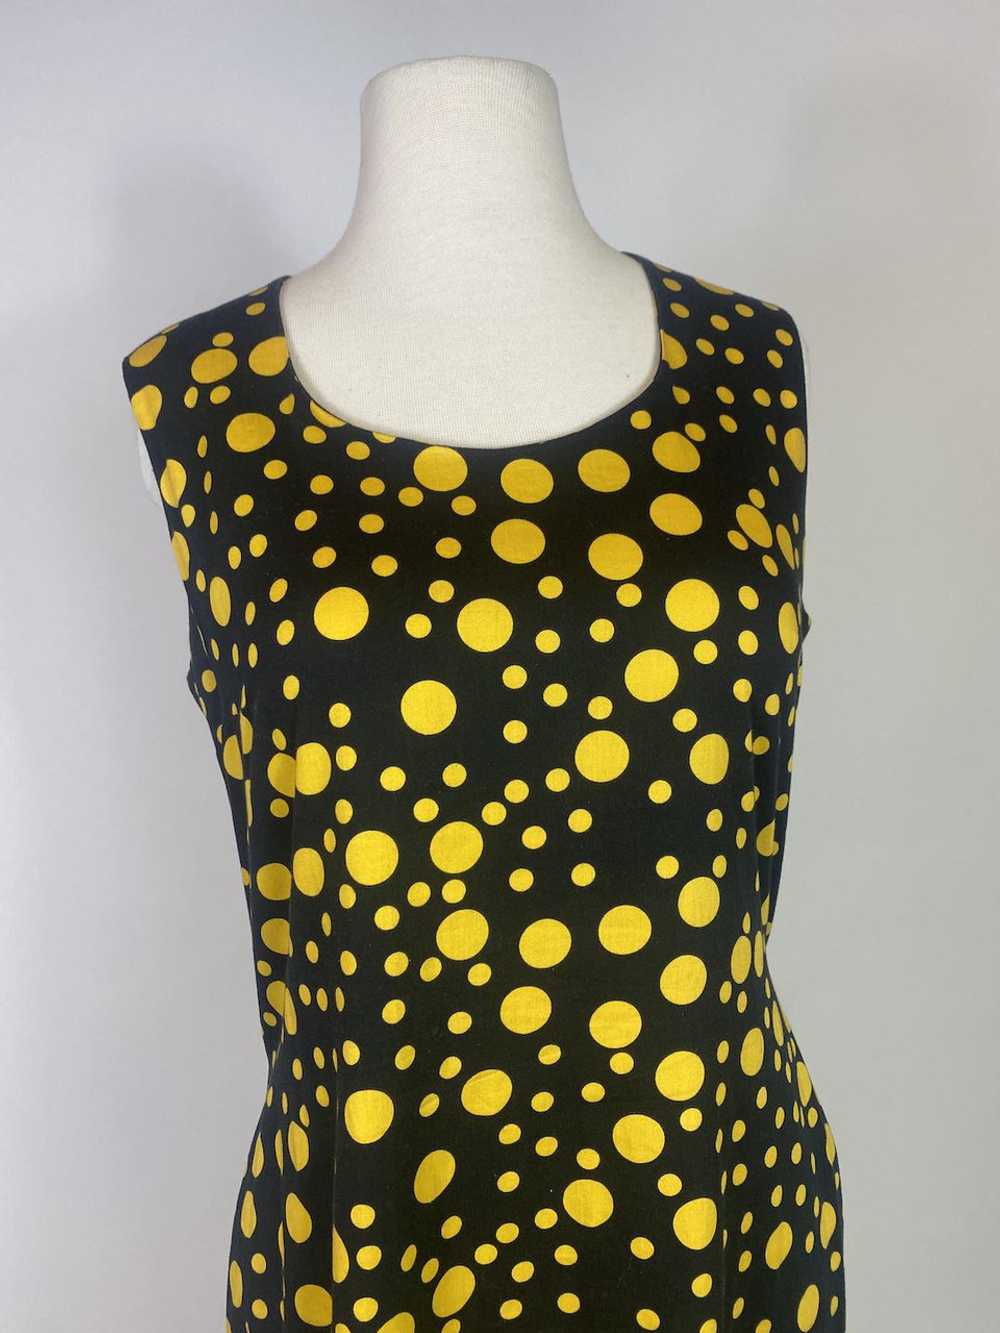 1990s DW3 Polka Dot Yellow and Black Dress - image 2